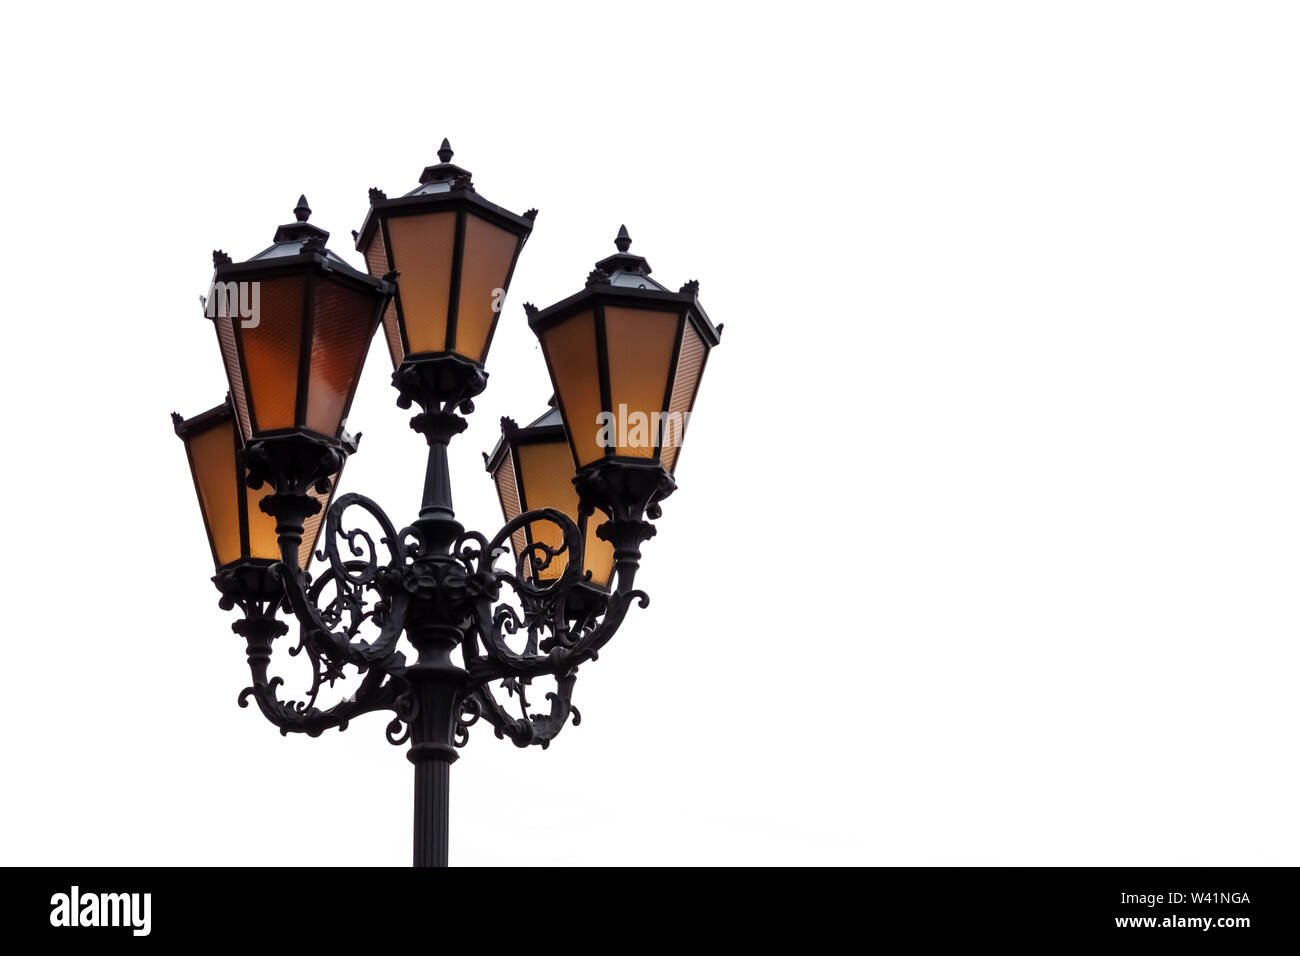 Straßenlampen, im alten Stil. Stockfoto